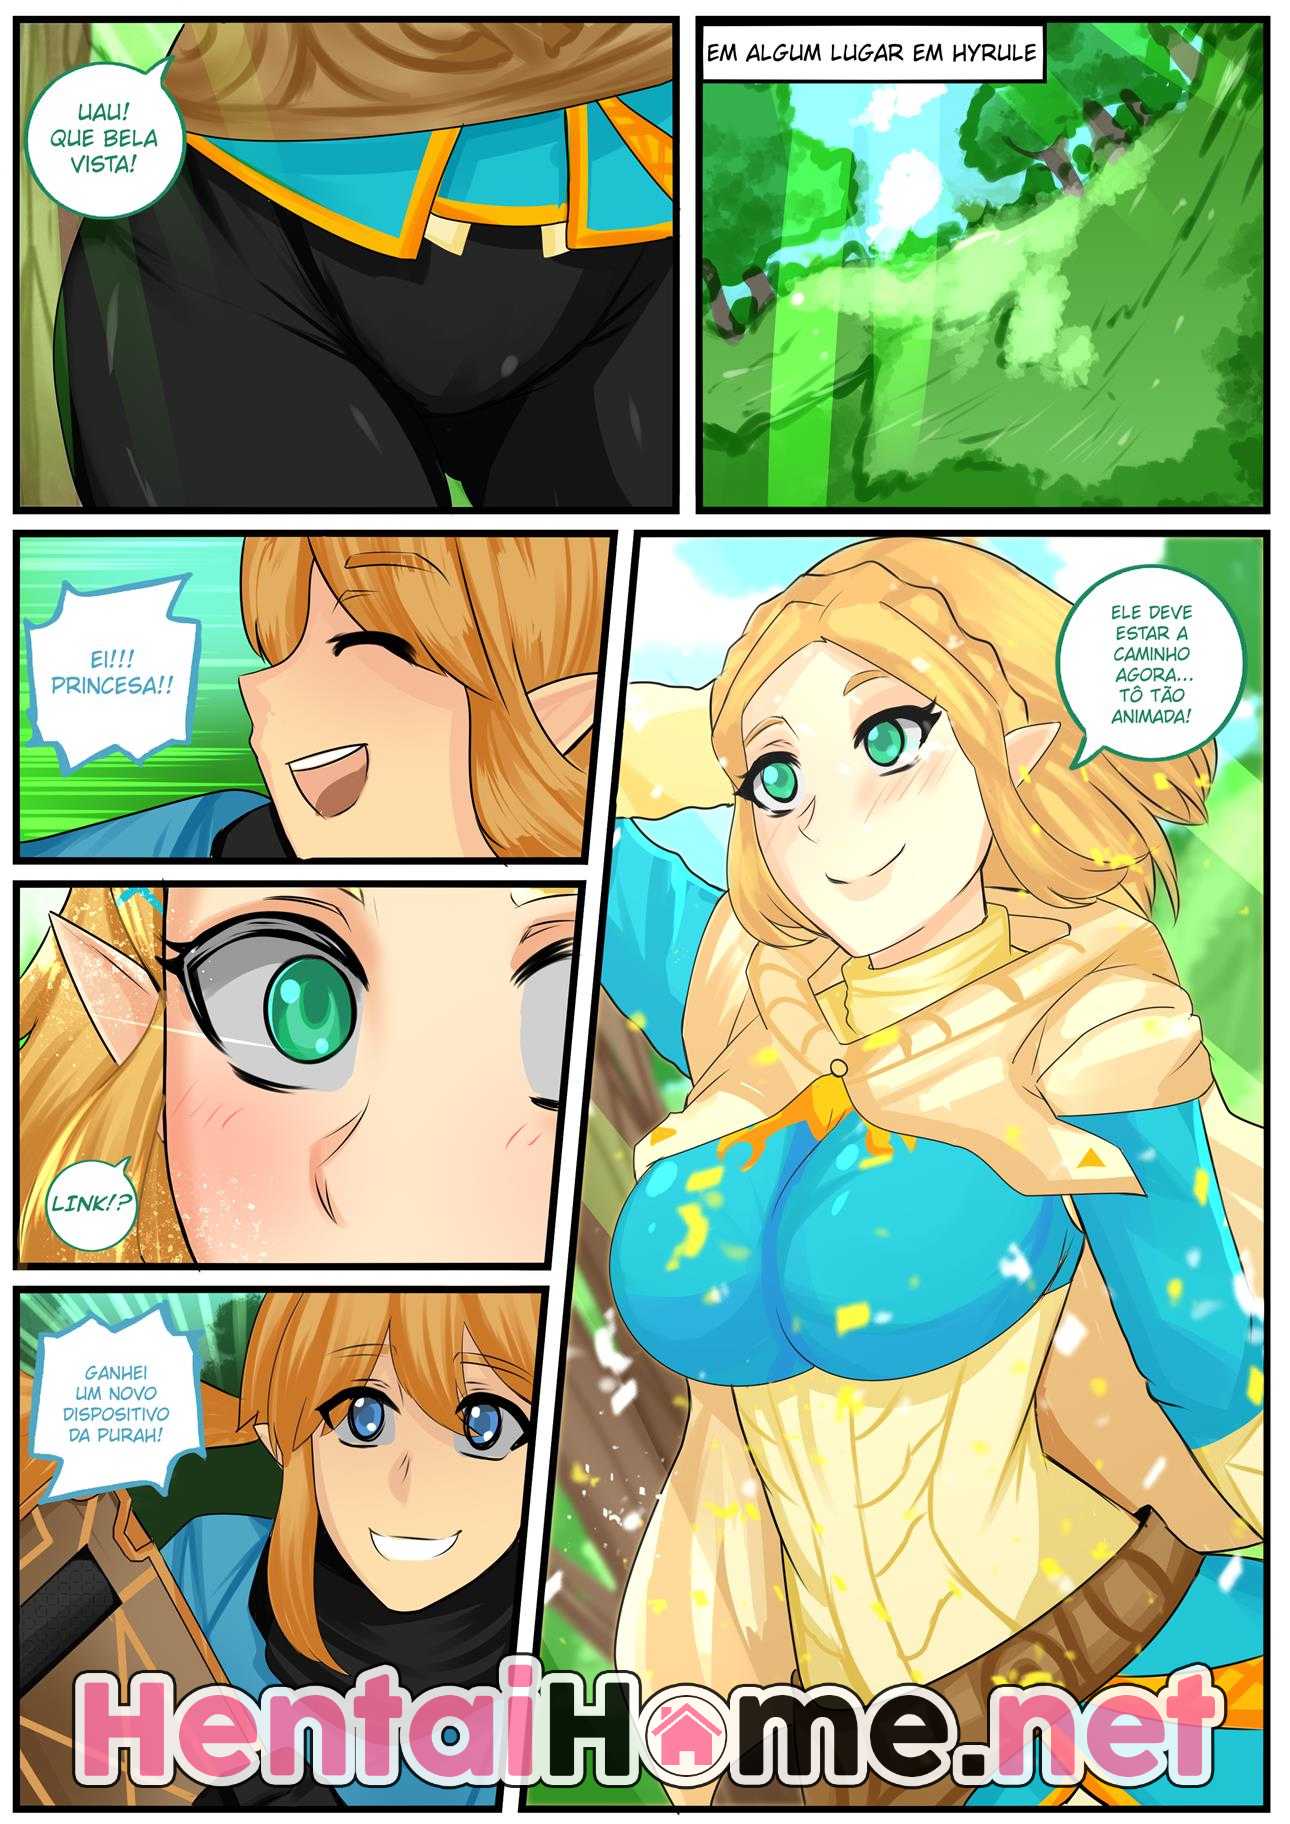 Zelda pornô fodendo